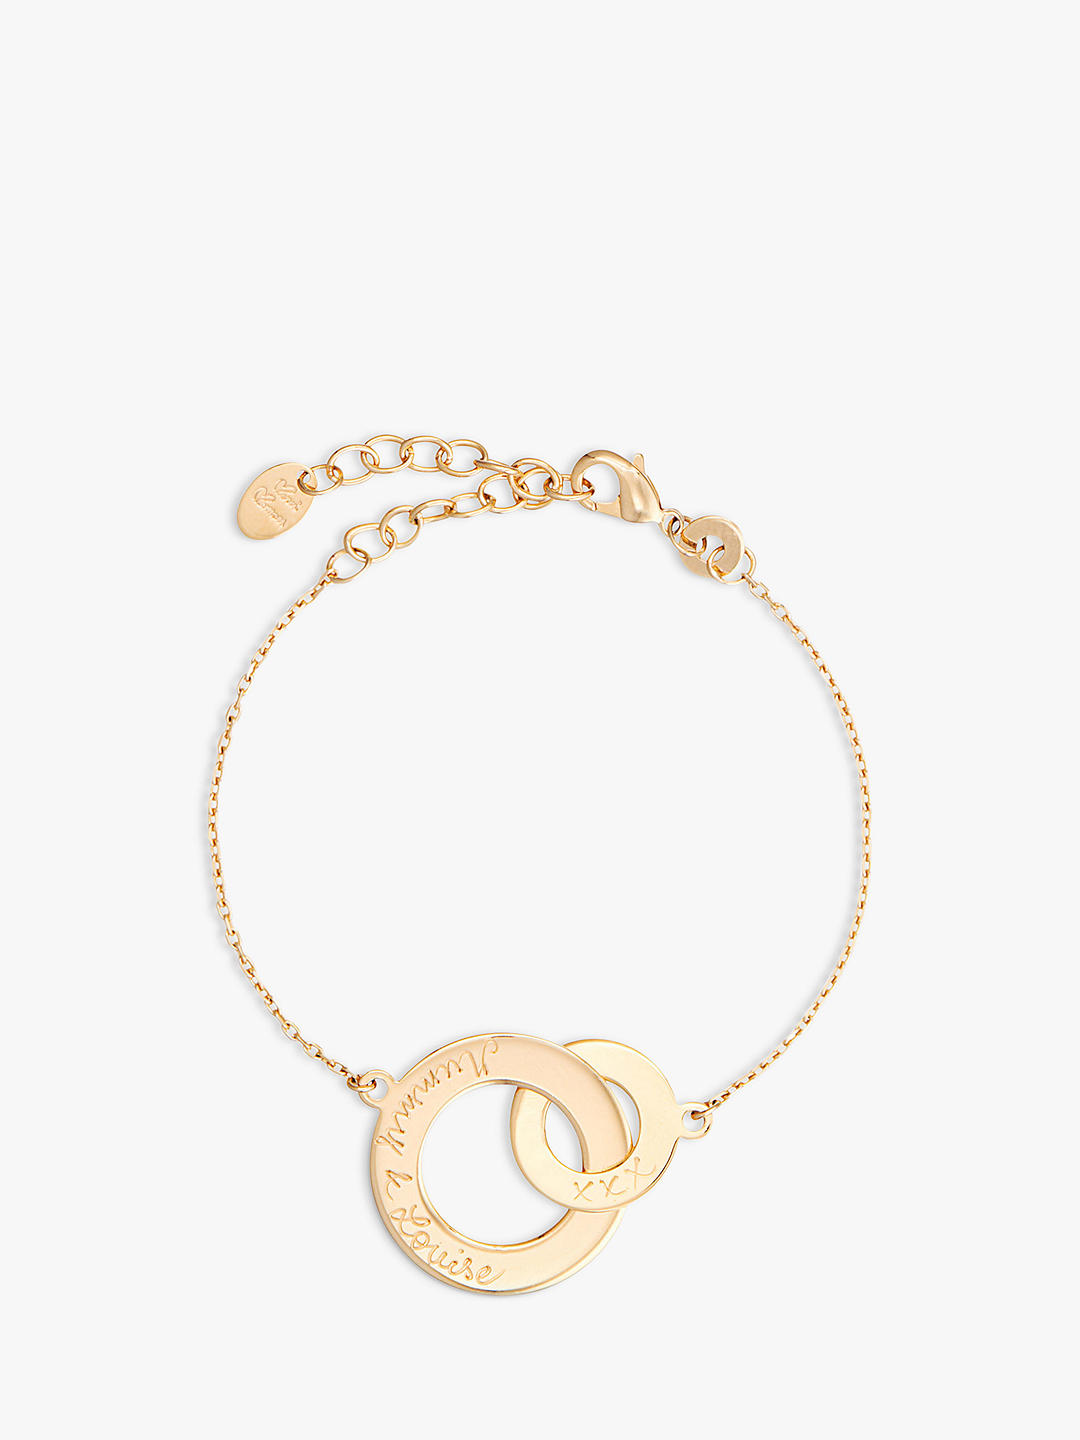 Merci Maman Personalised Intertwined Chain Bracelet, Gold